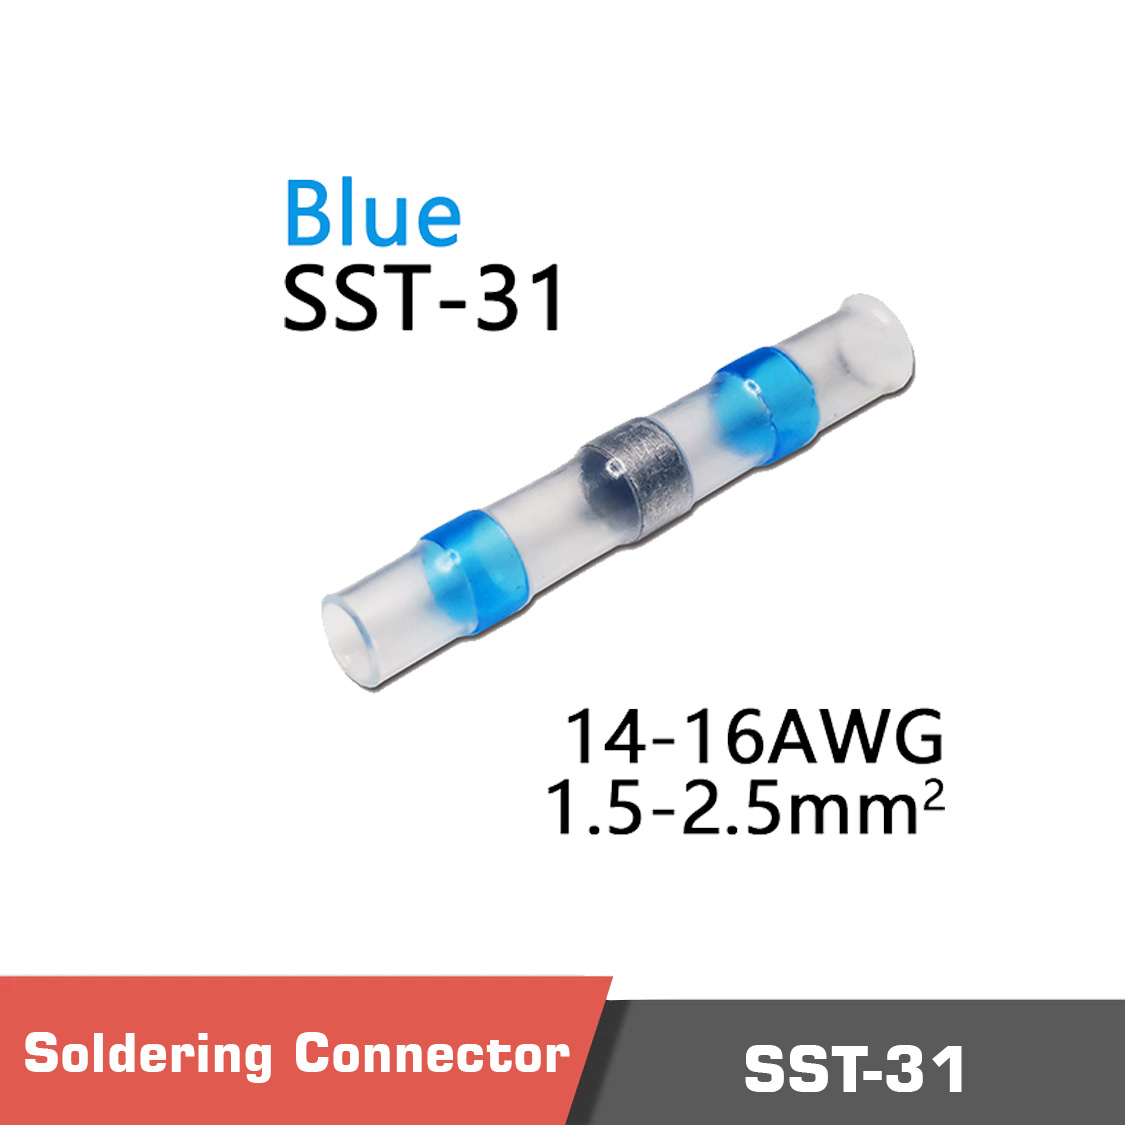 Sst 31 - sst-41,sst-41 soldering connector,soldering connector - motionew - 13